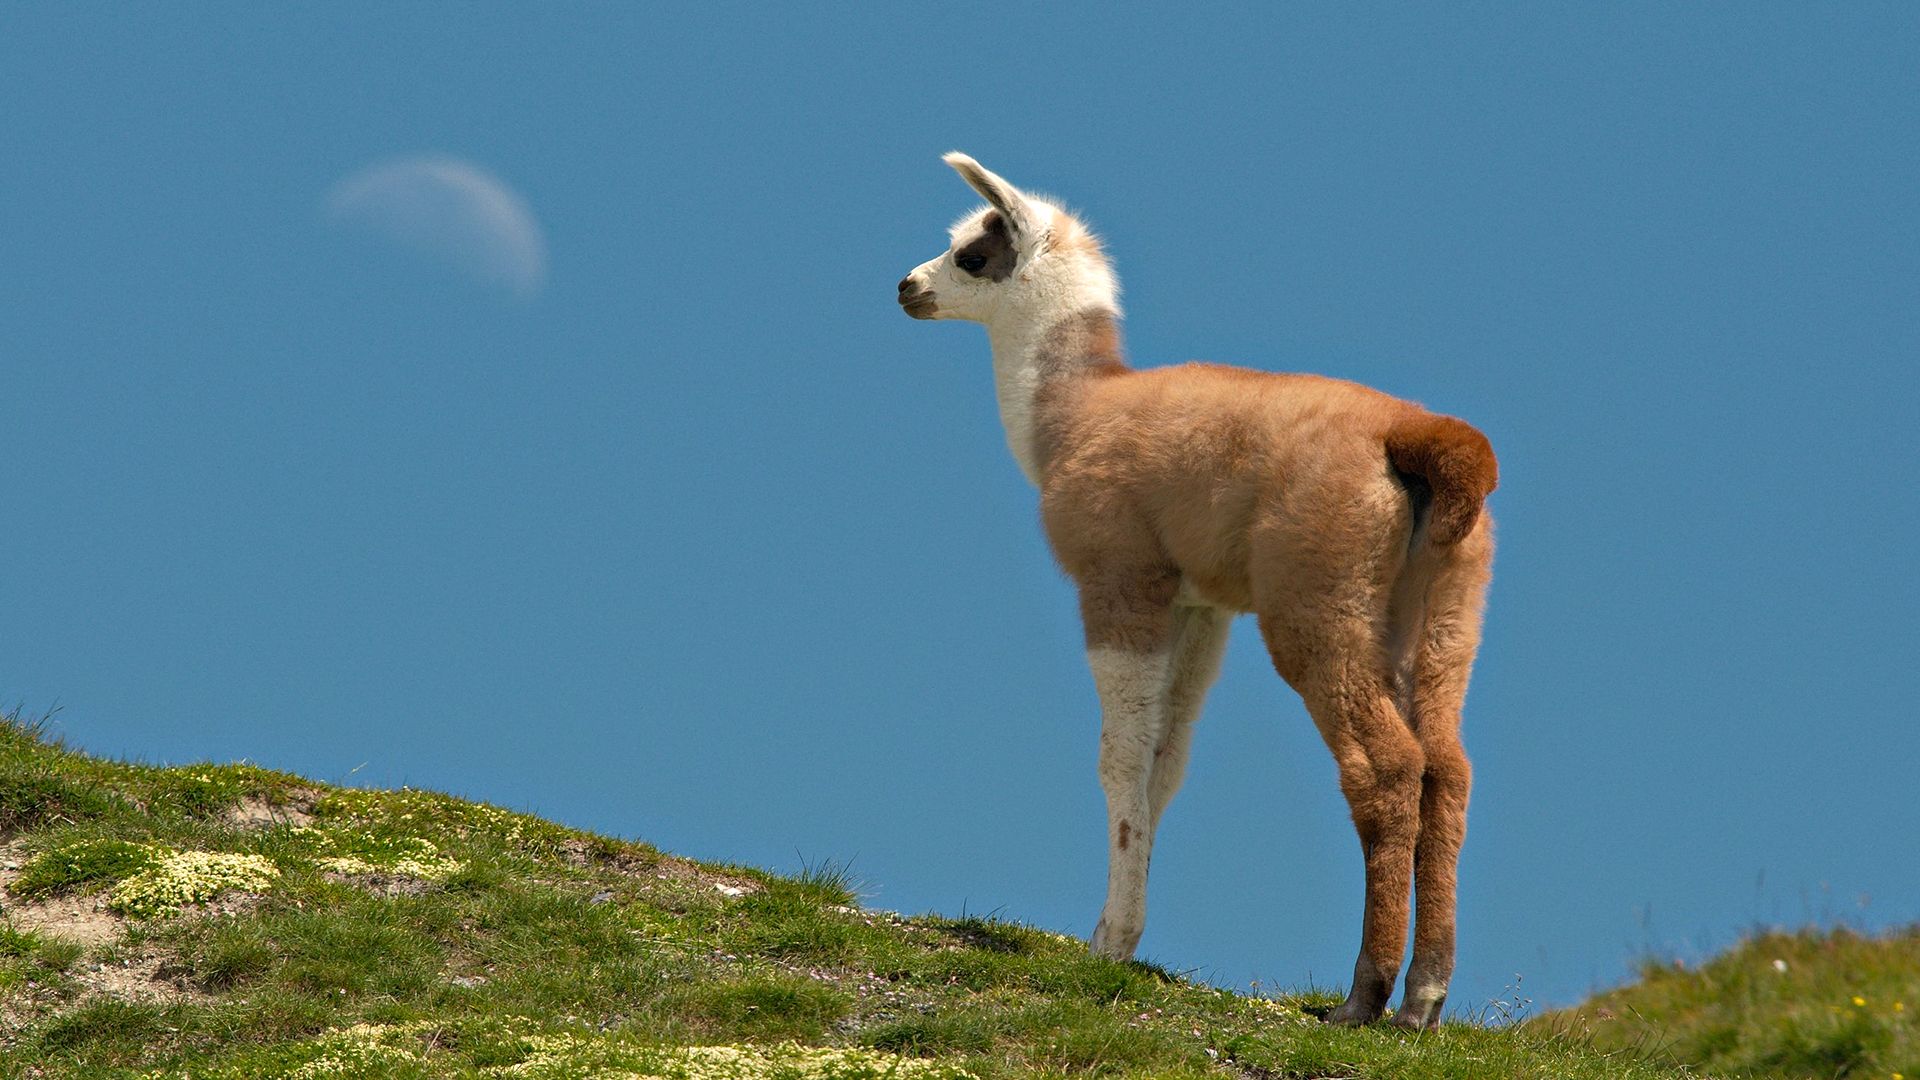 Llama Desktop Wallpaper